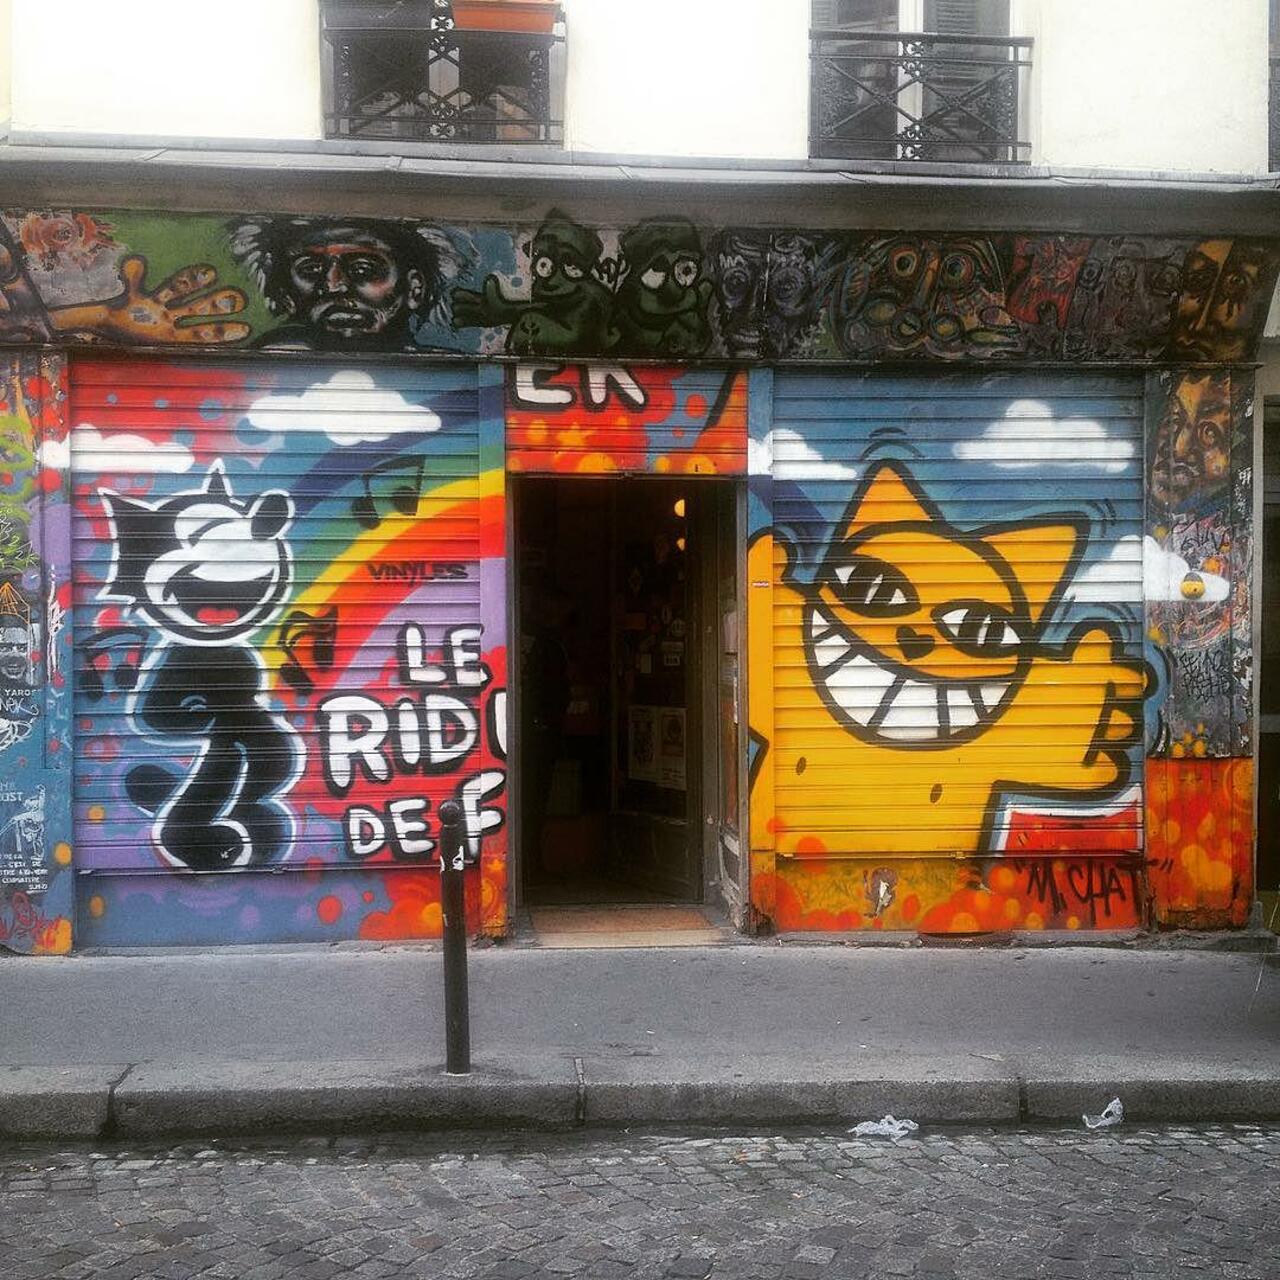 #Paris #graffiti photo by @mh2p_ http://ift.tt/1LWcb5p #StreetArt http://t.co/HK8ndgLRyv